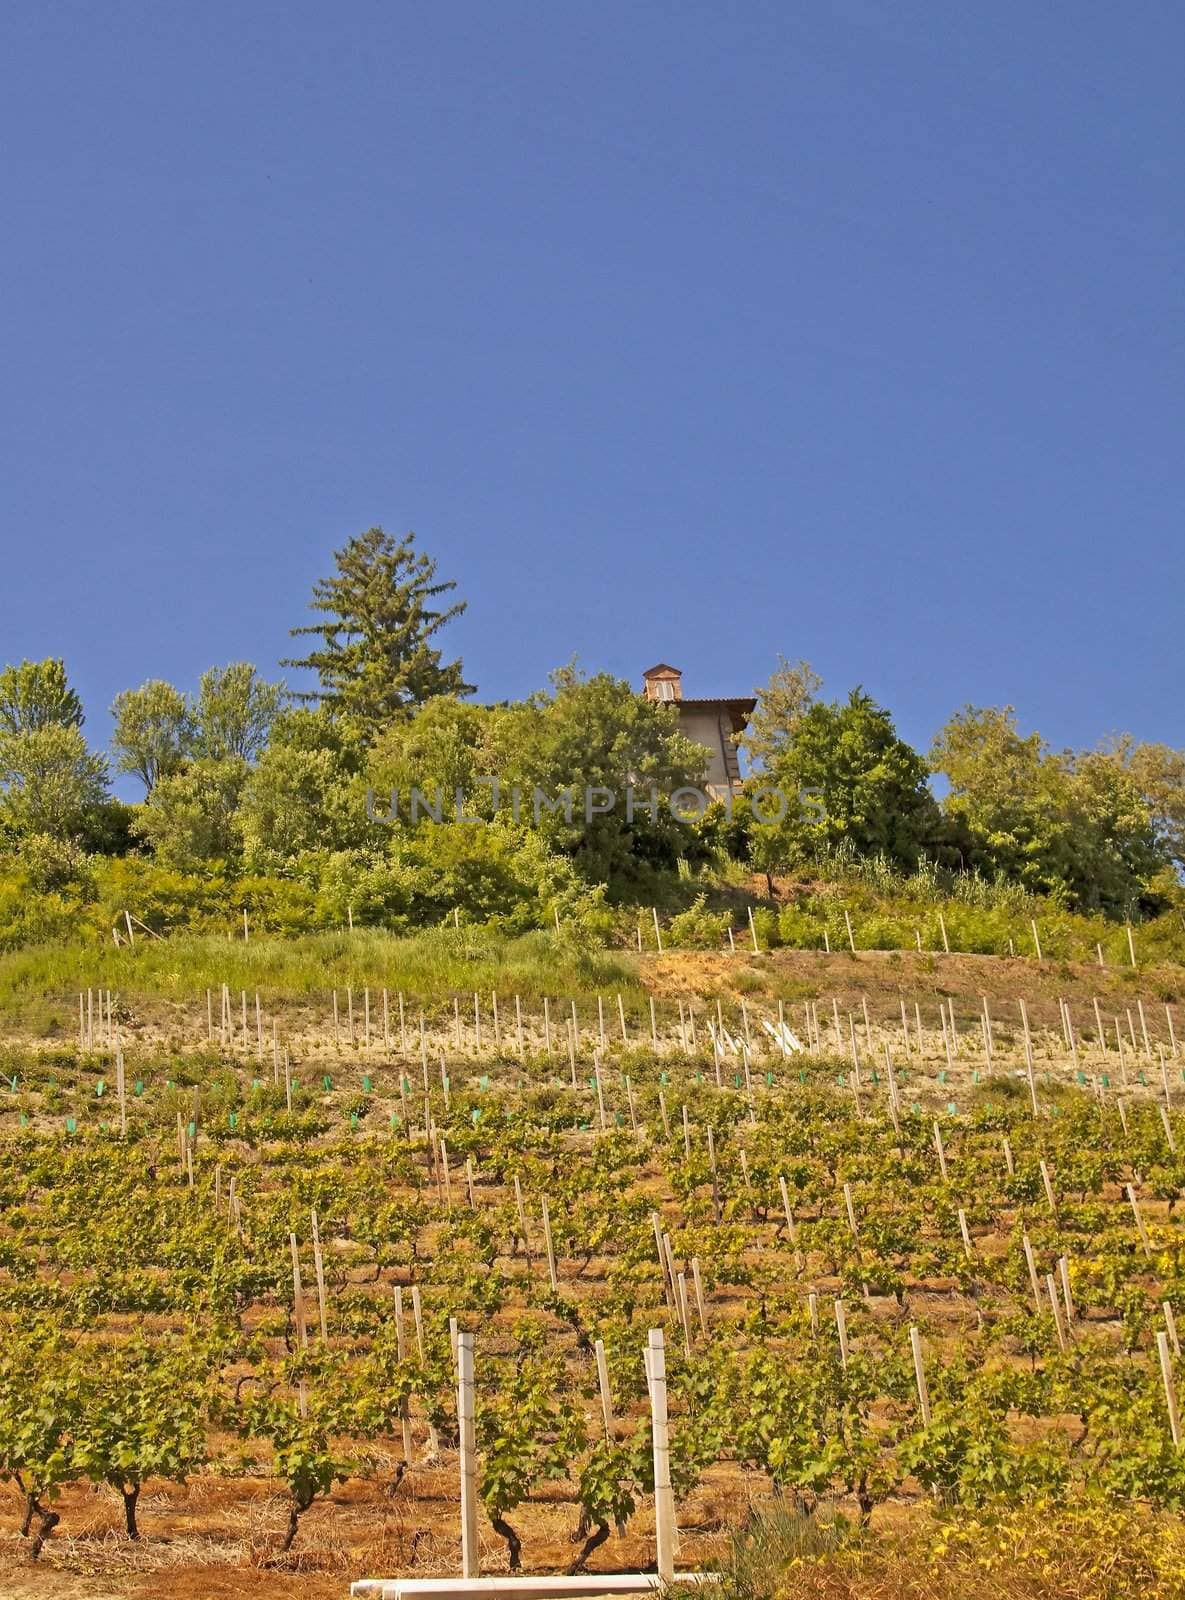 A landscape of a vineyard on a hill